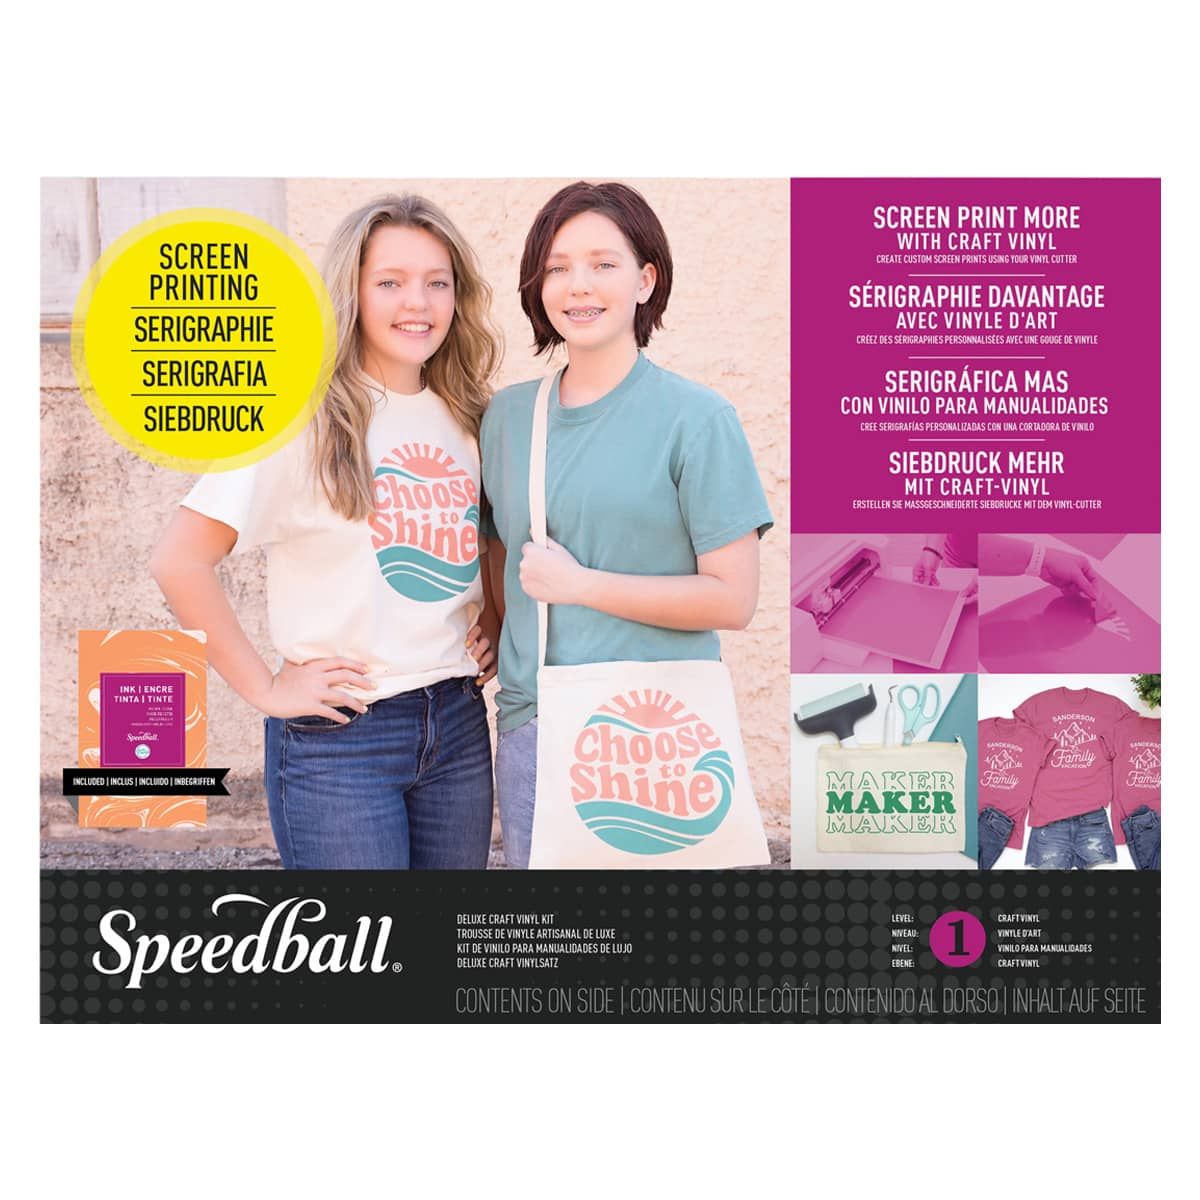 Speedball Speed Screens Screen Printing Kit